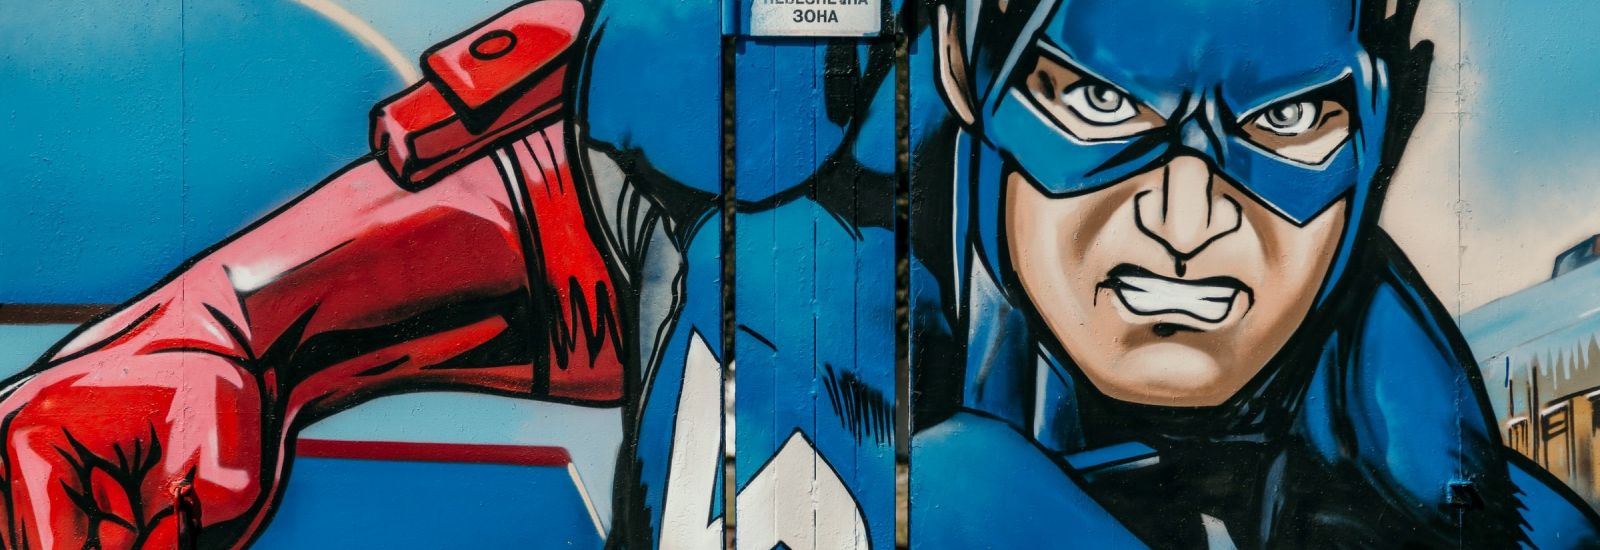 Graffiti of Captain America